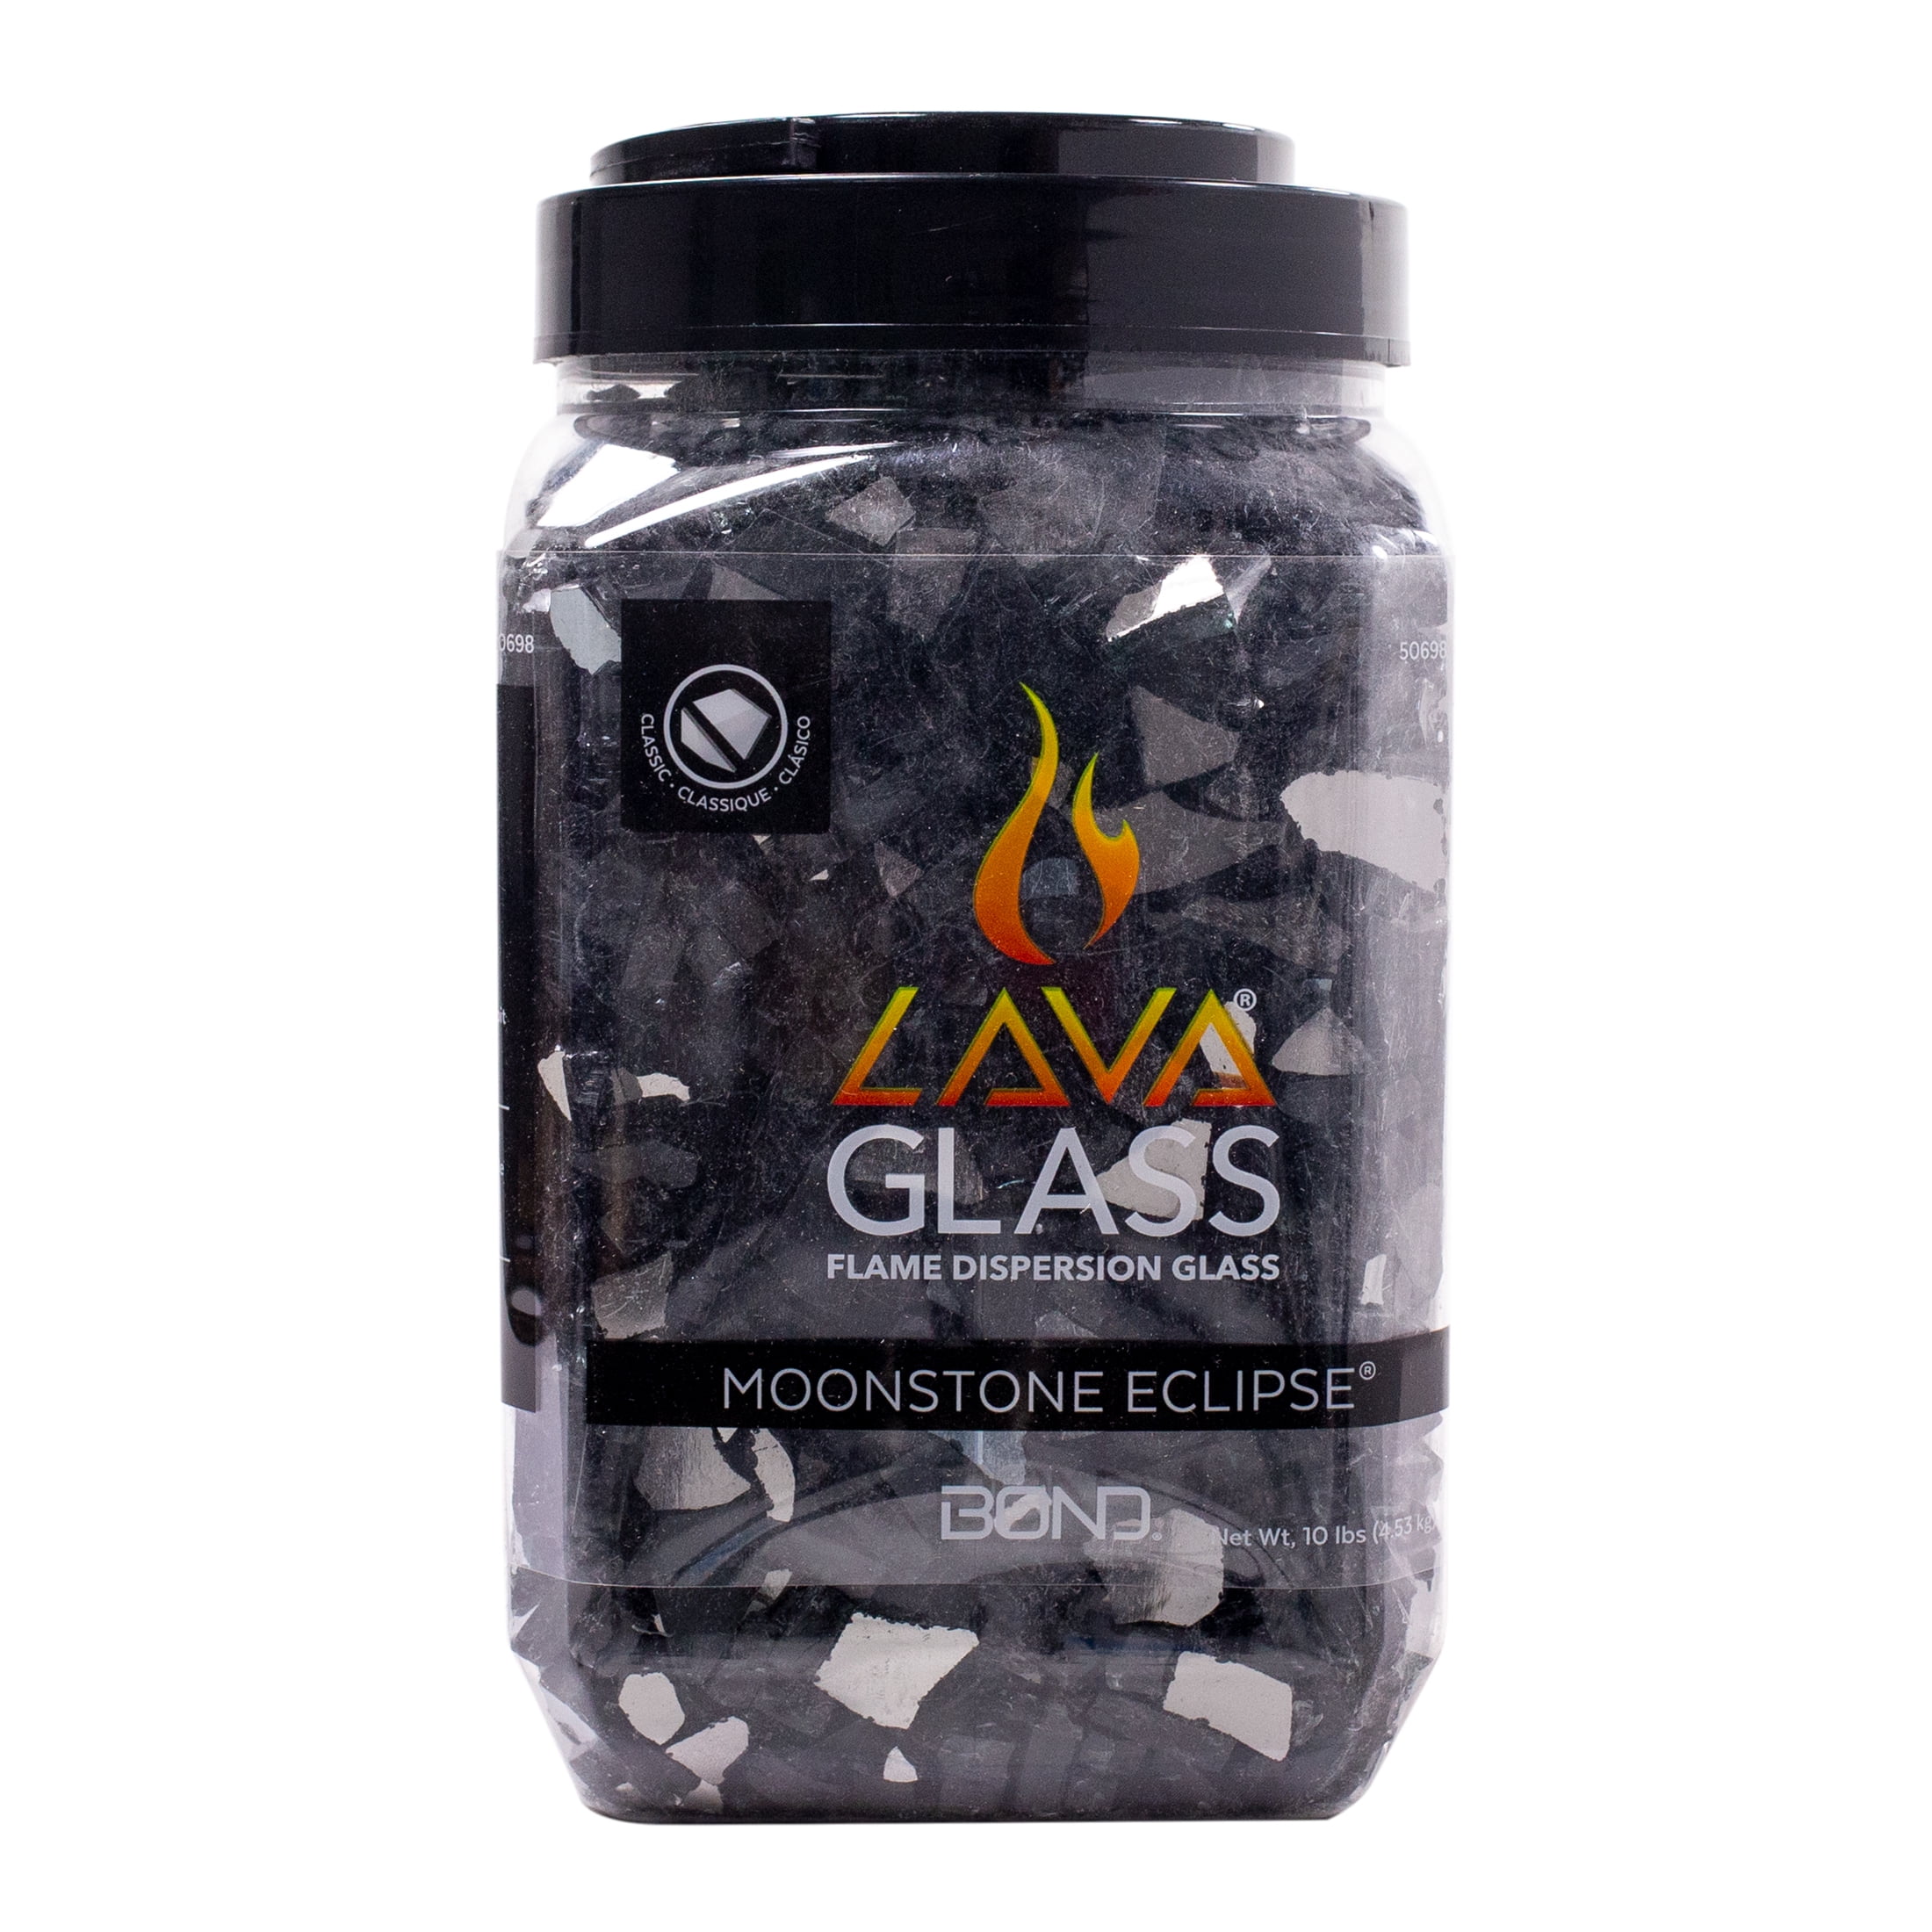 Bond Lavaglass® 1/2" Moonstone Eclipse Reflective Fire Glass, 10 lbs